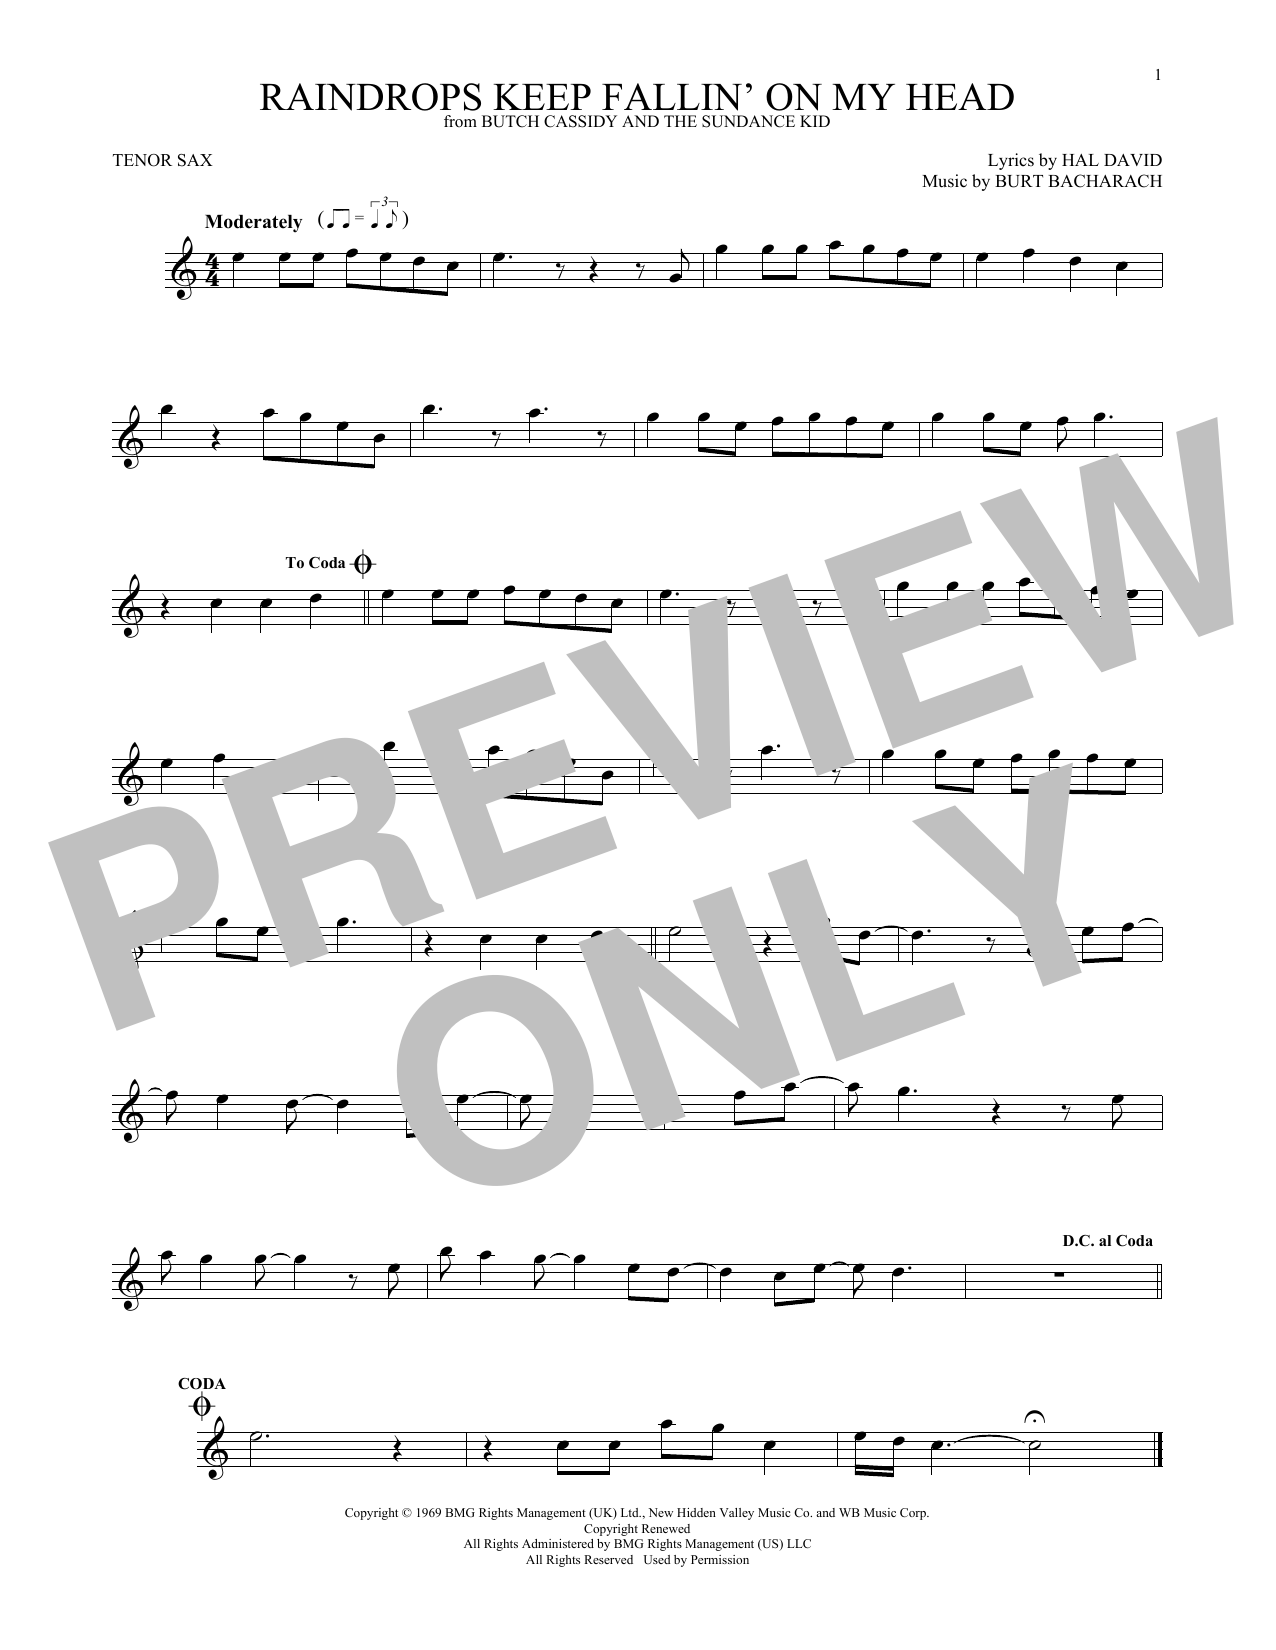 Burt Bacharach Raindrops Keep Fallin' On My Head Sheet Music Notes & Chords for Flute - Download or Print PDF